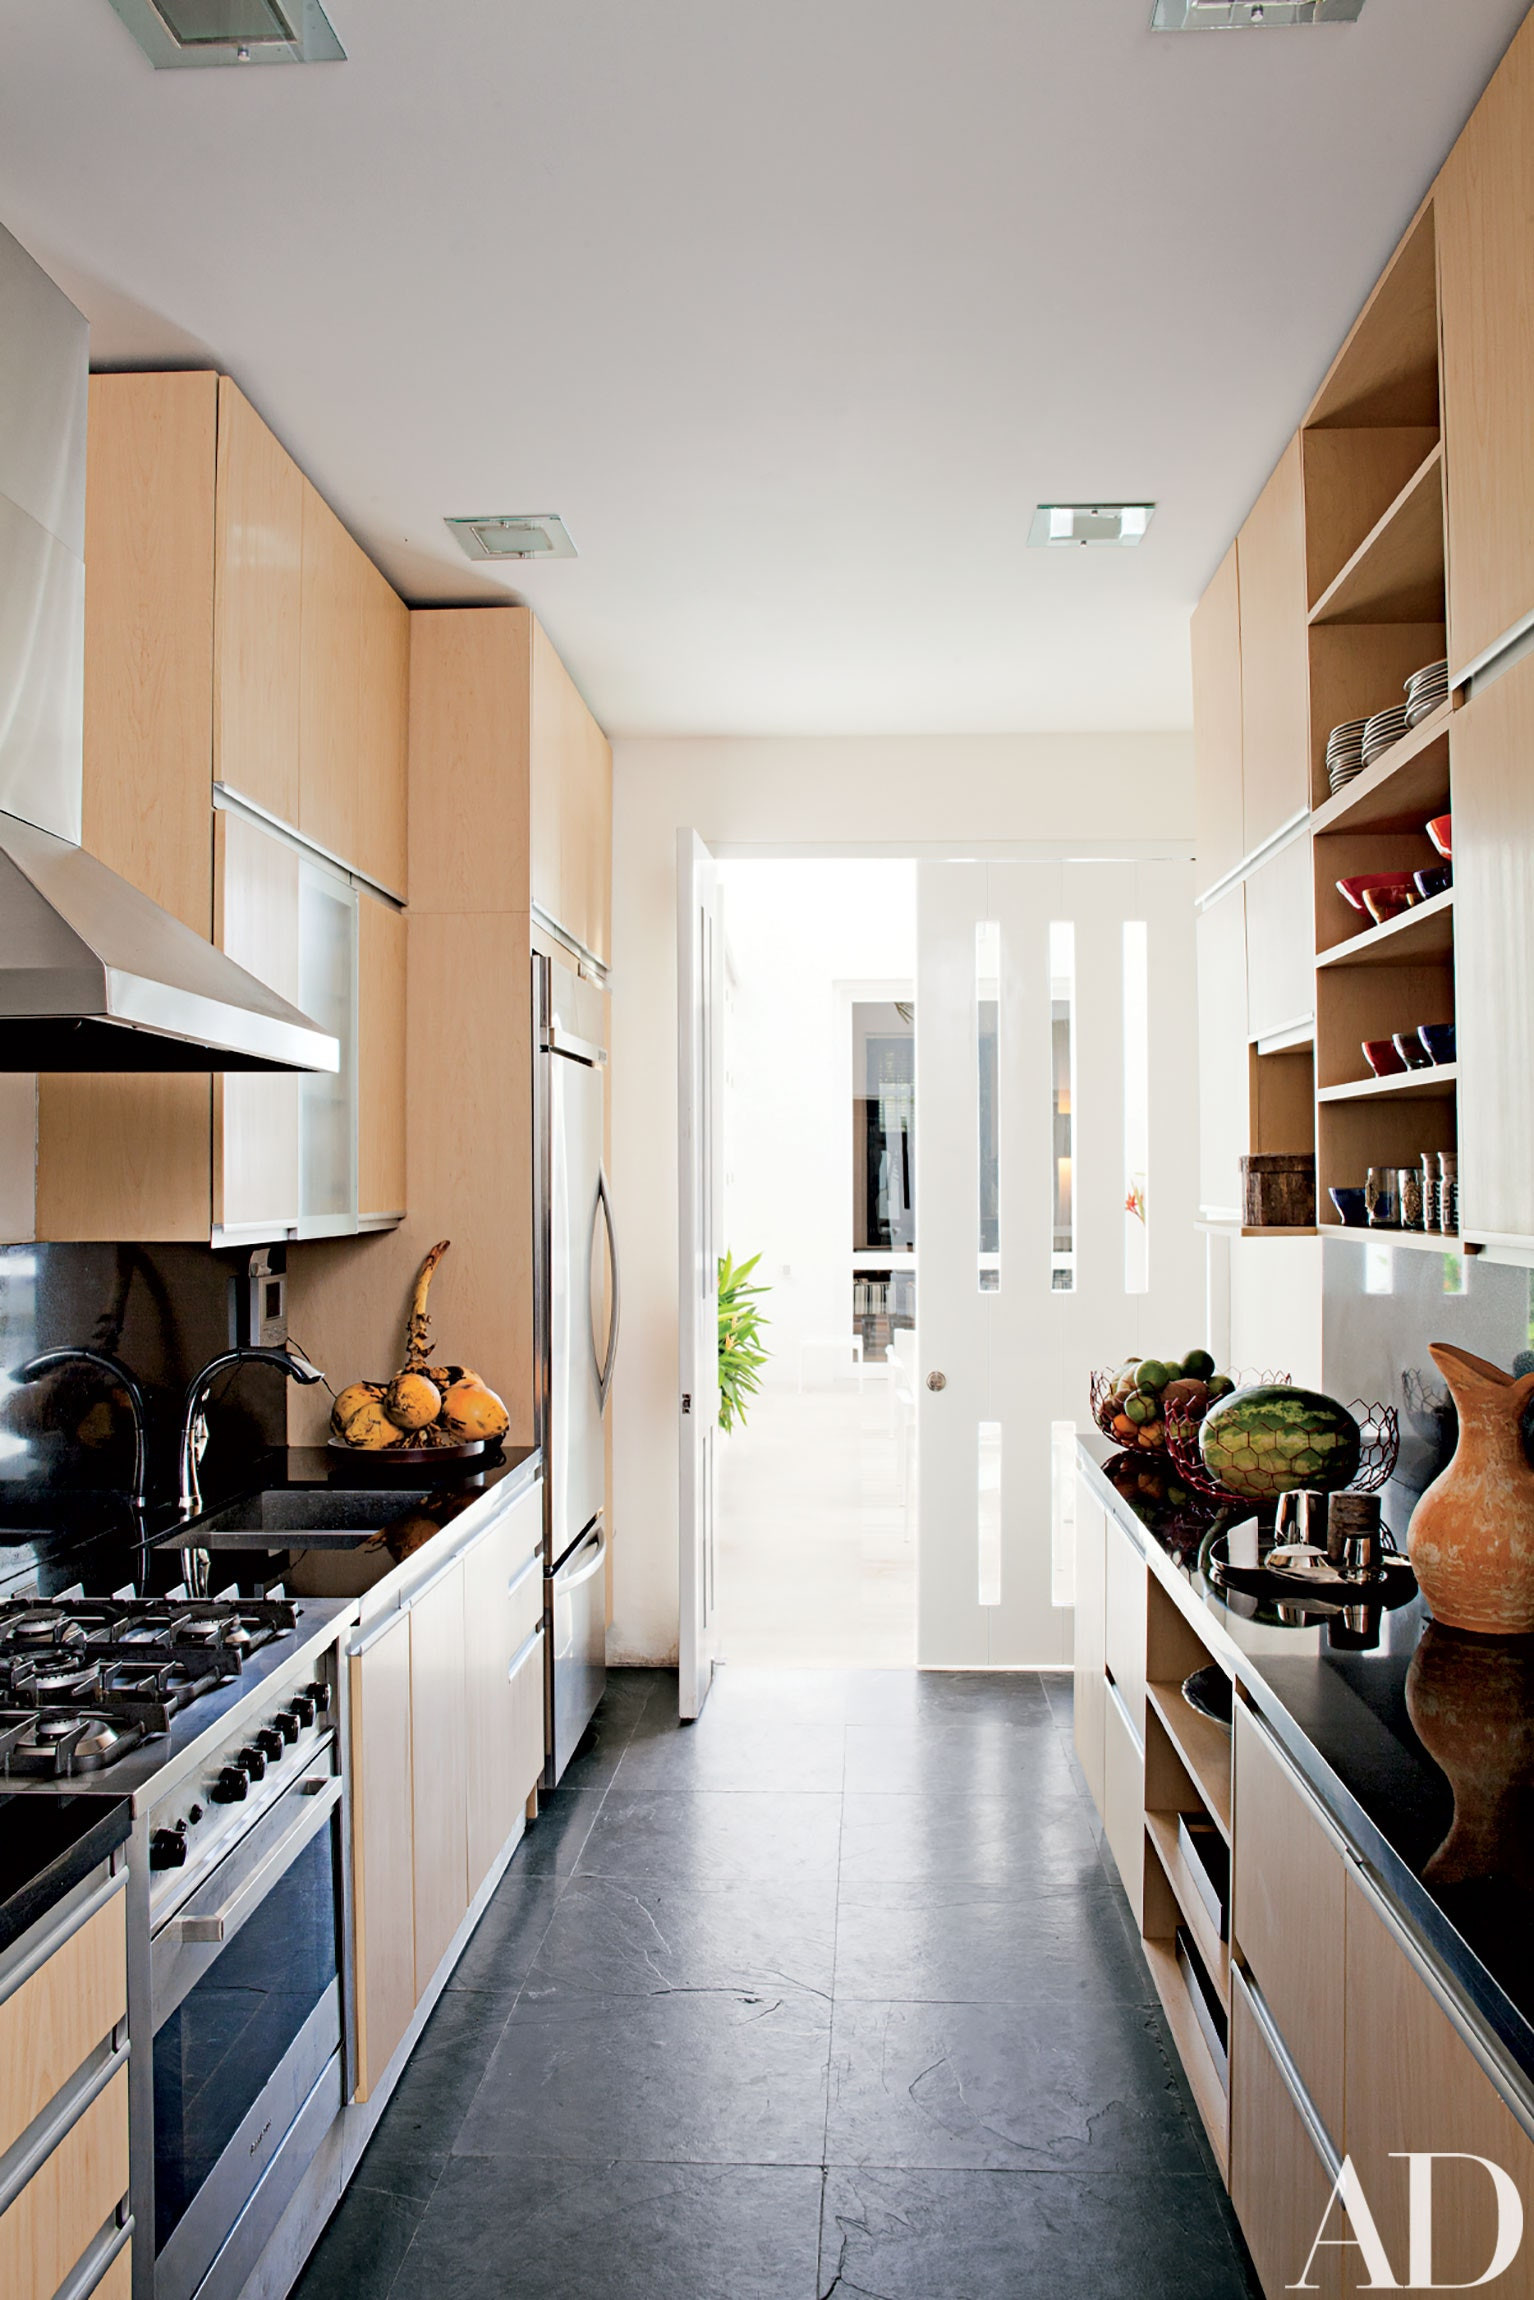 Small Gallery Kitchen Designs
 Small Galley Kitchen Ideas & Design Inspiration